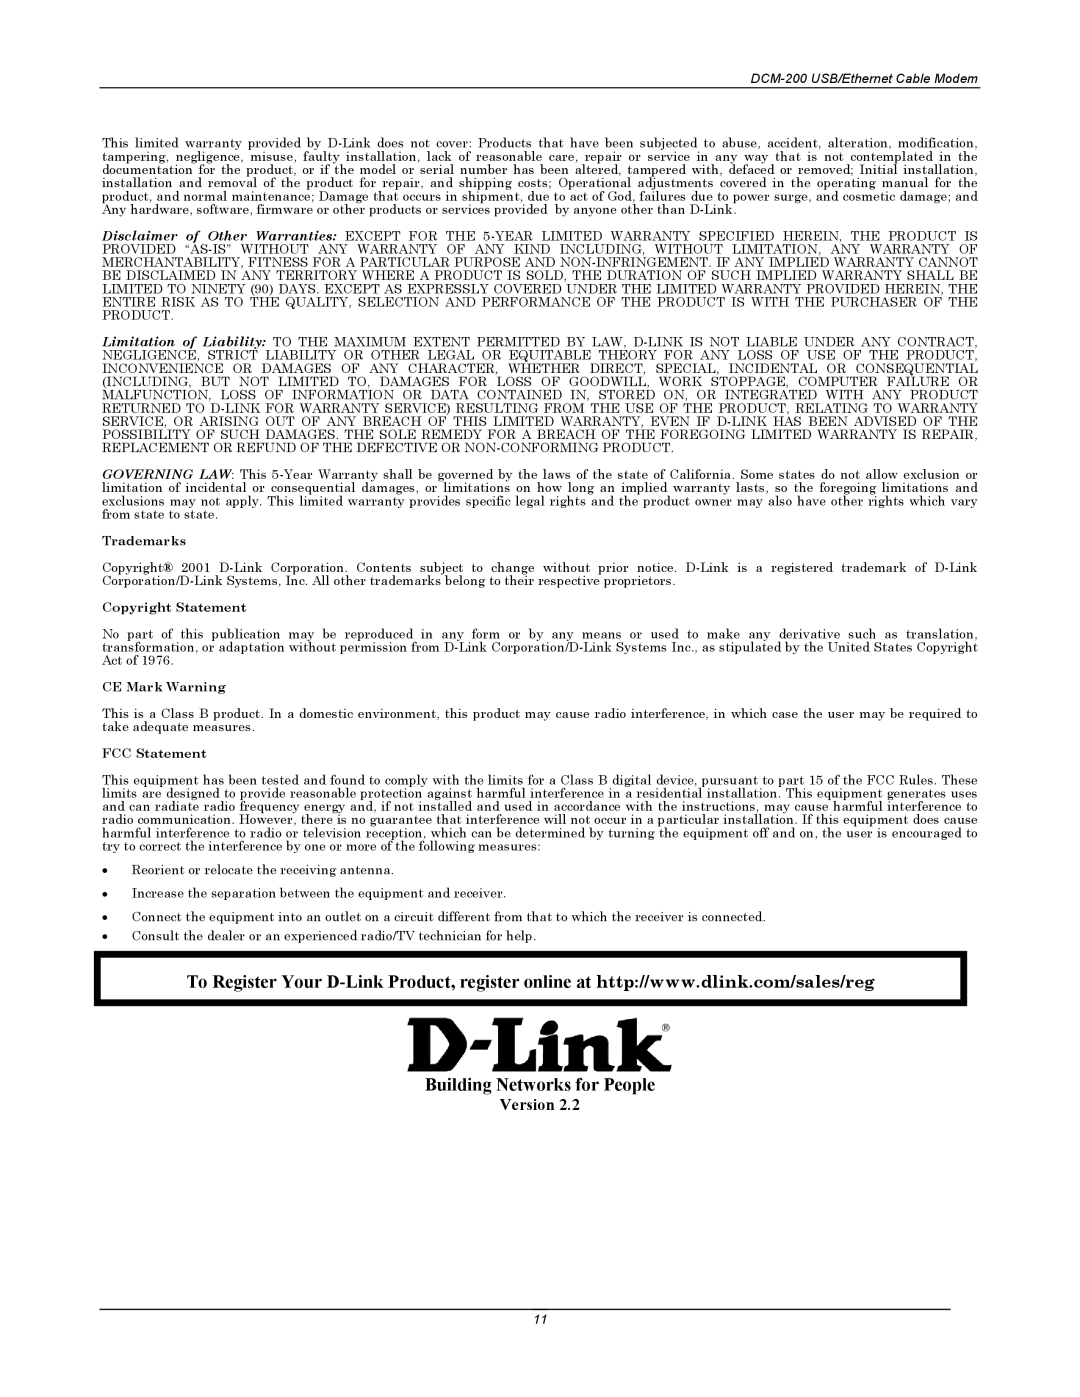 D-Link DCM-200 manual Building Networks for People 